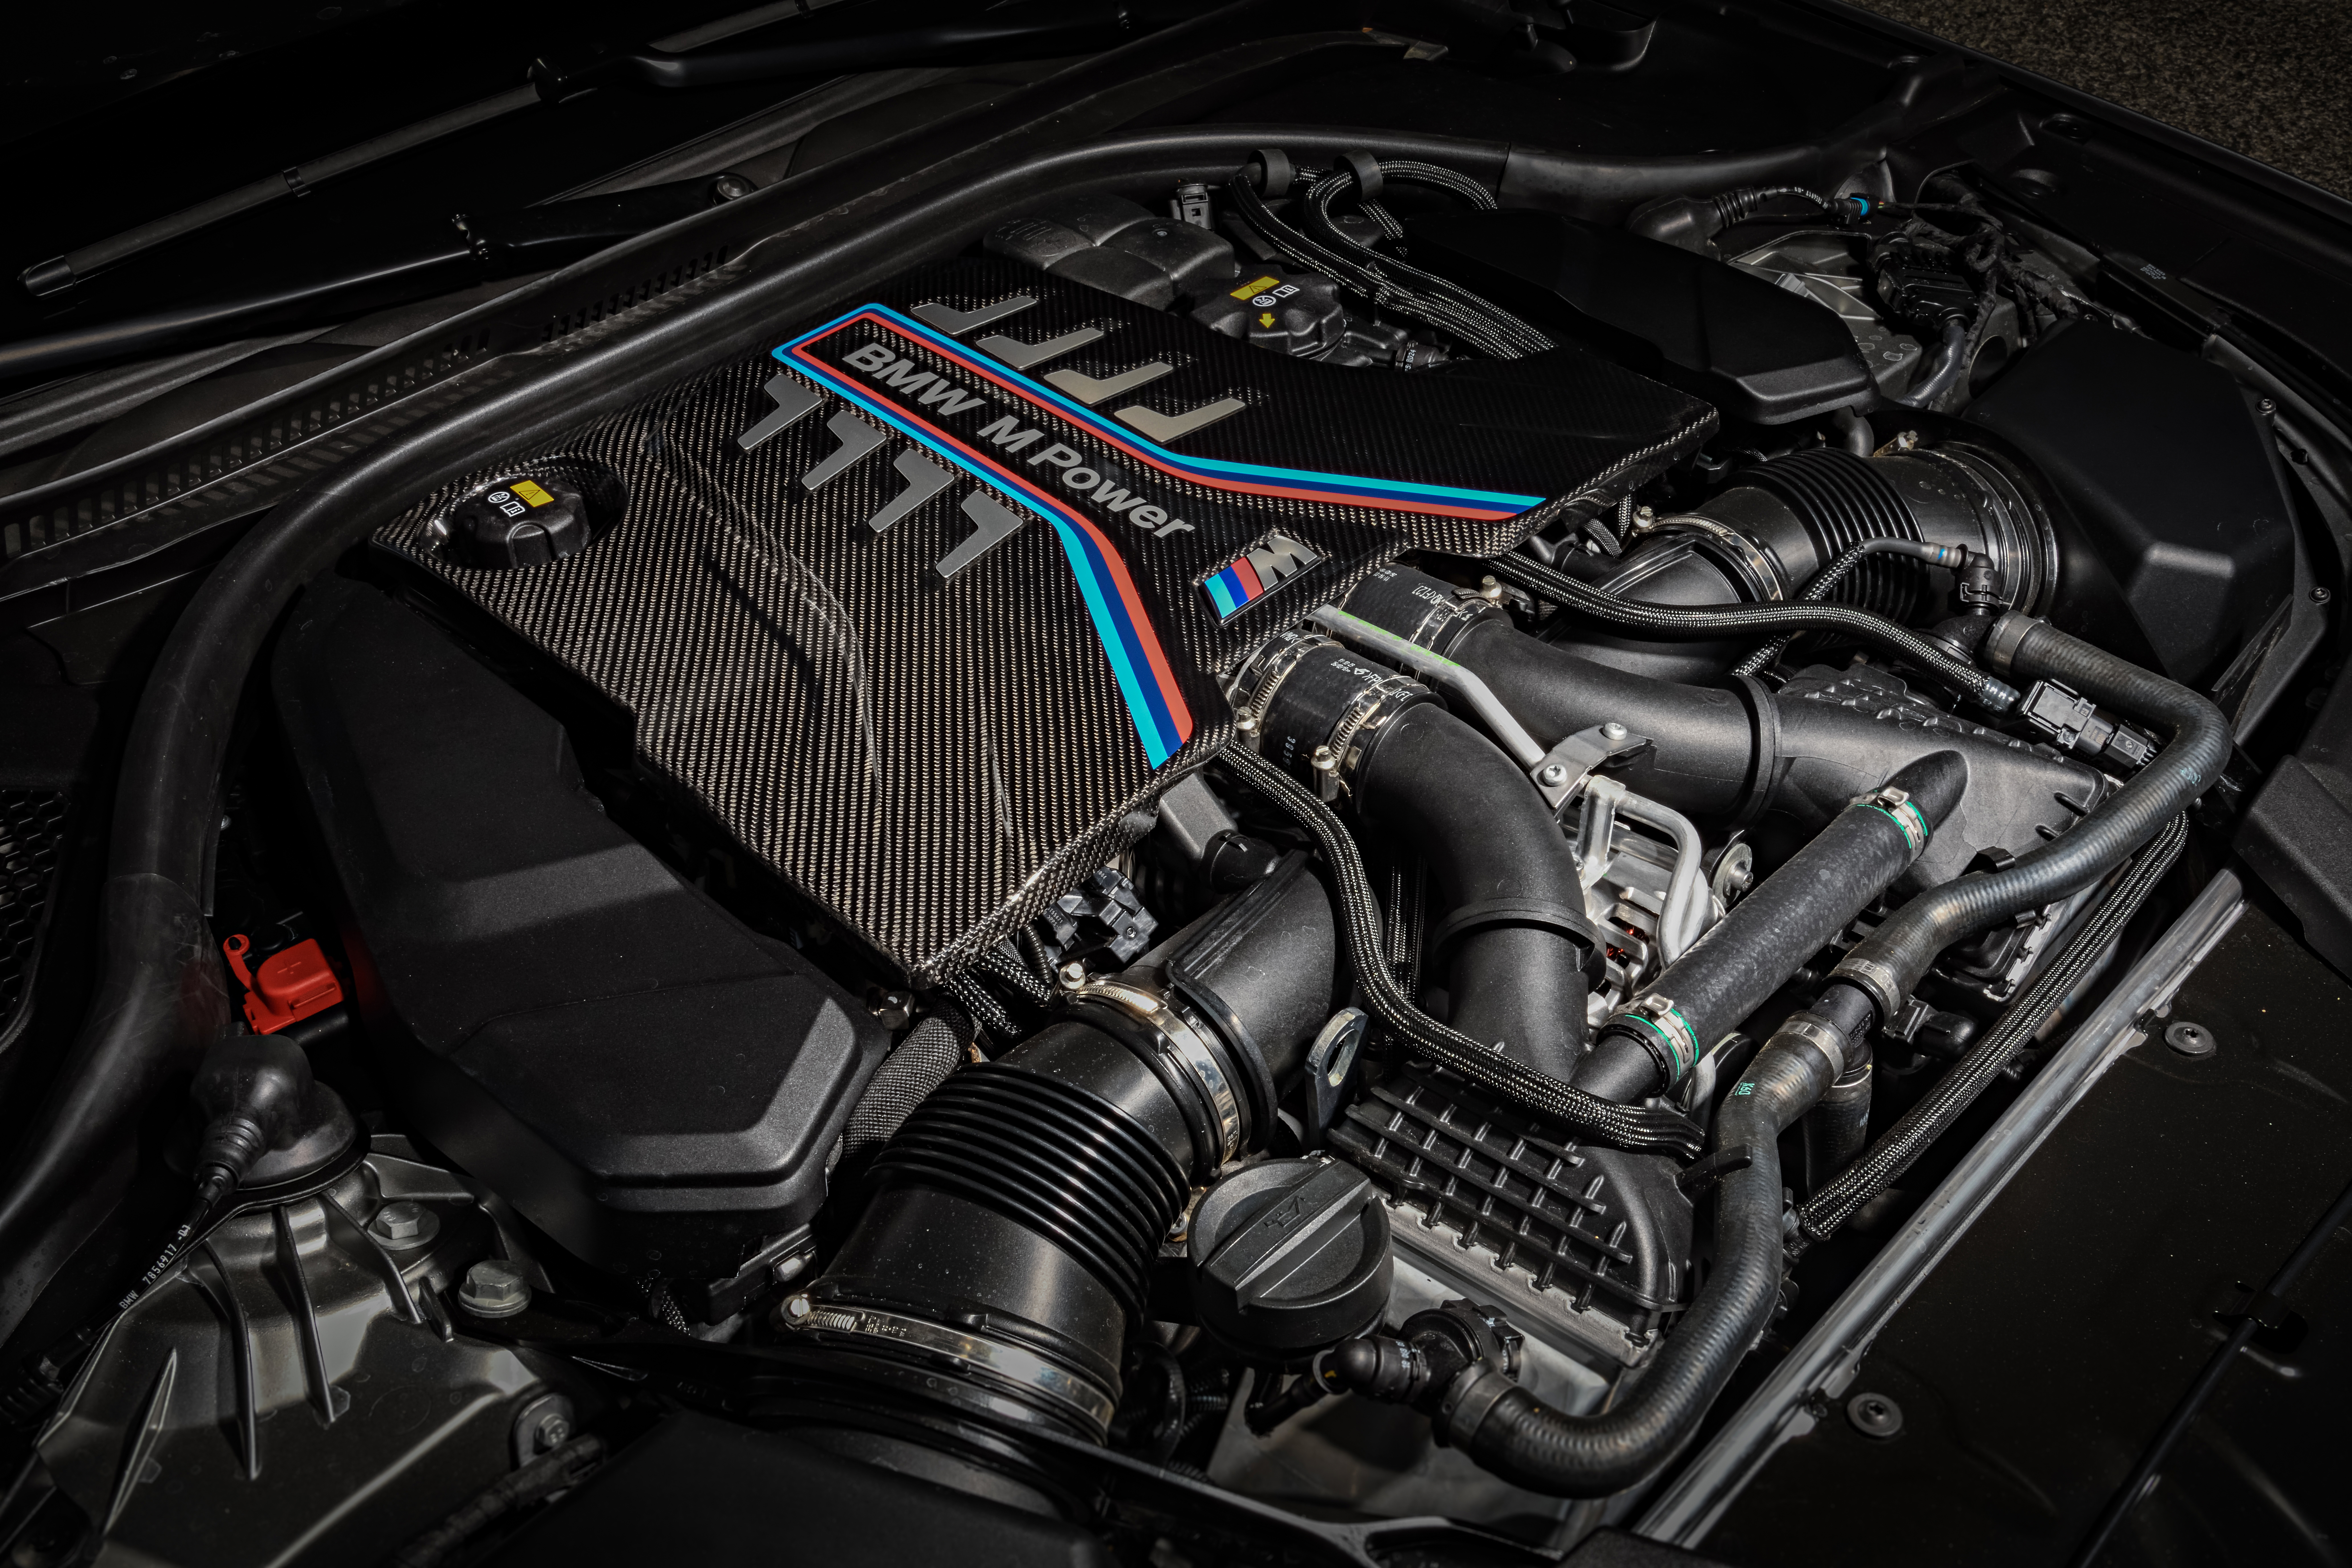 The 4.4-litre V8 produces 616bhp